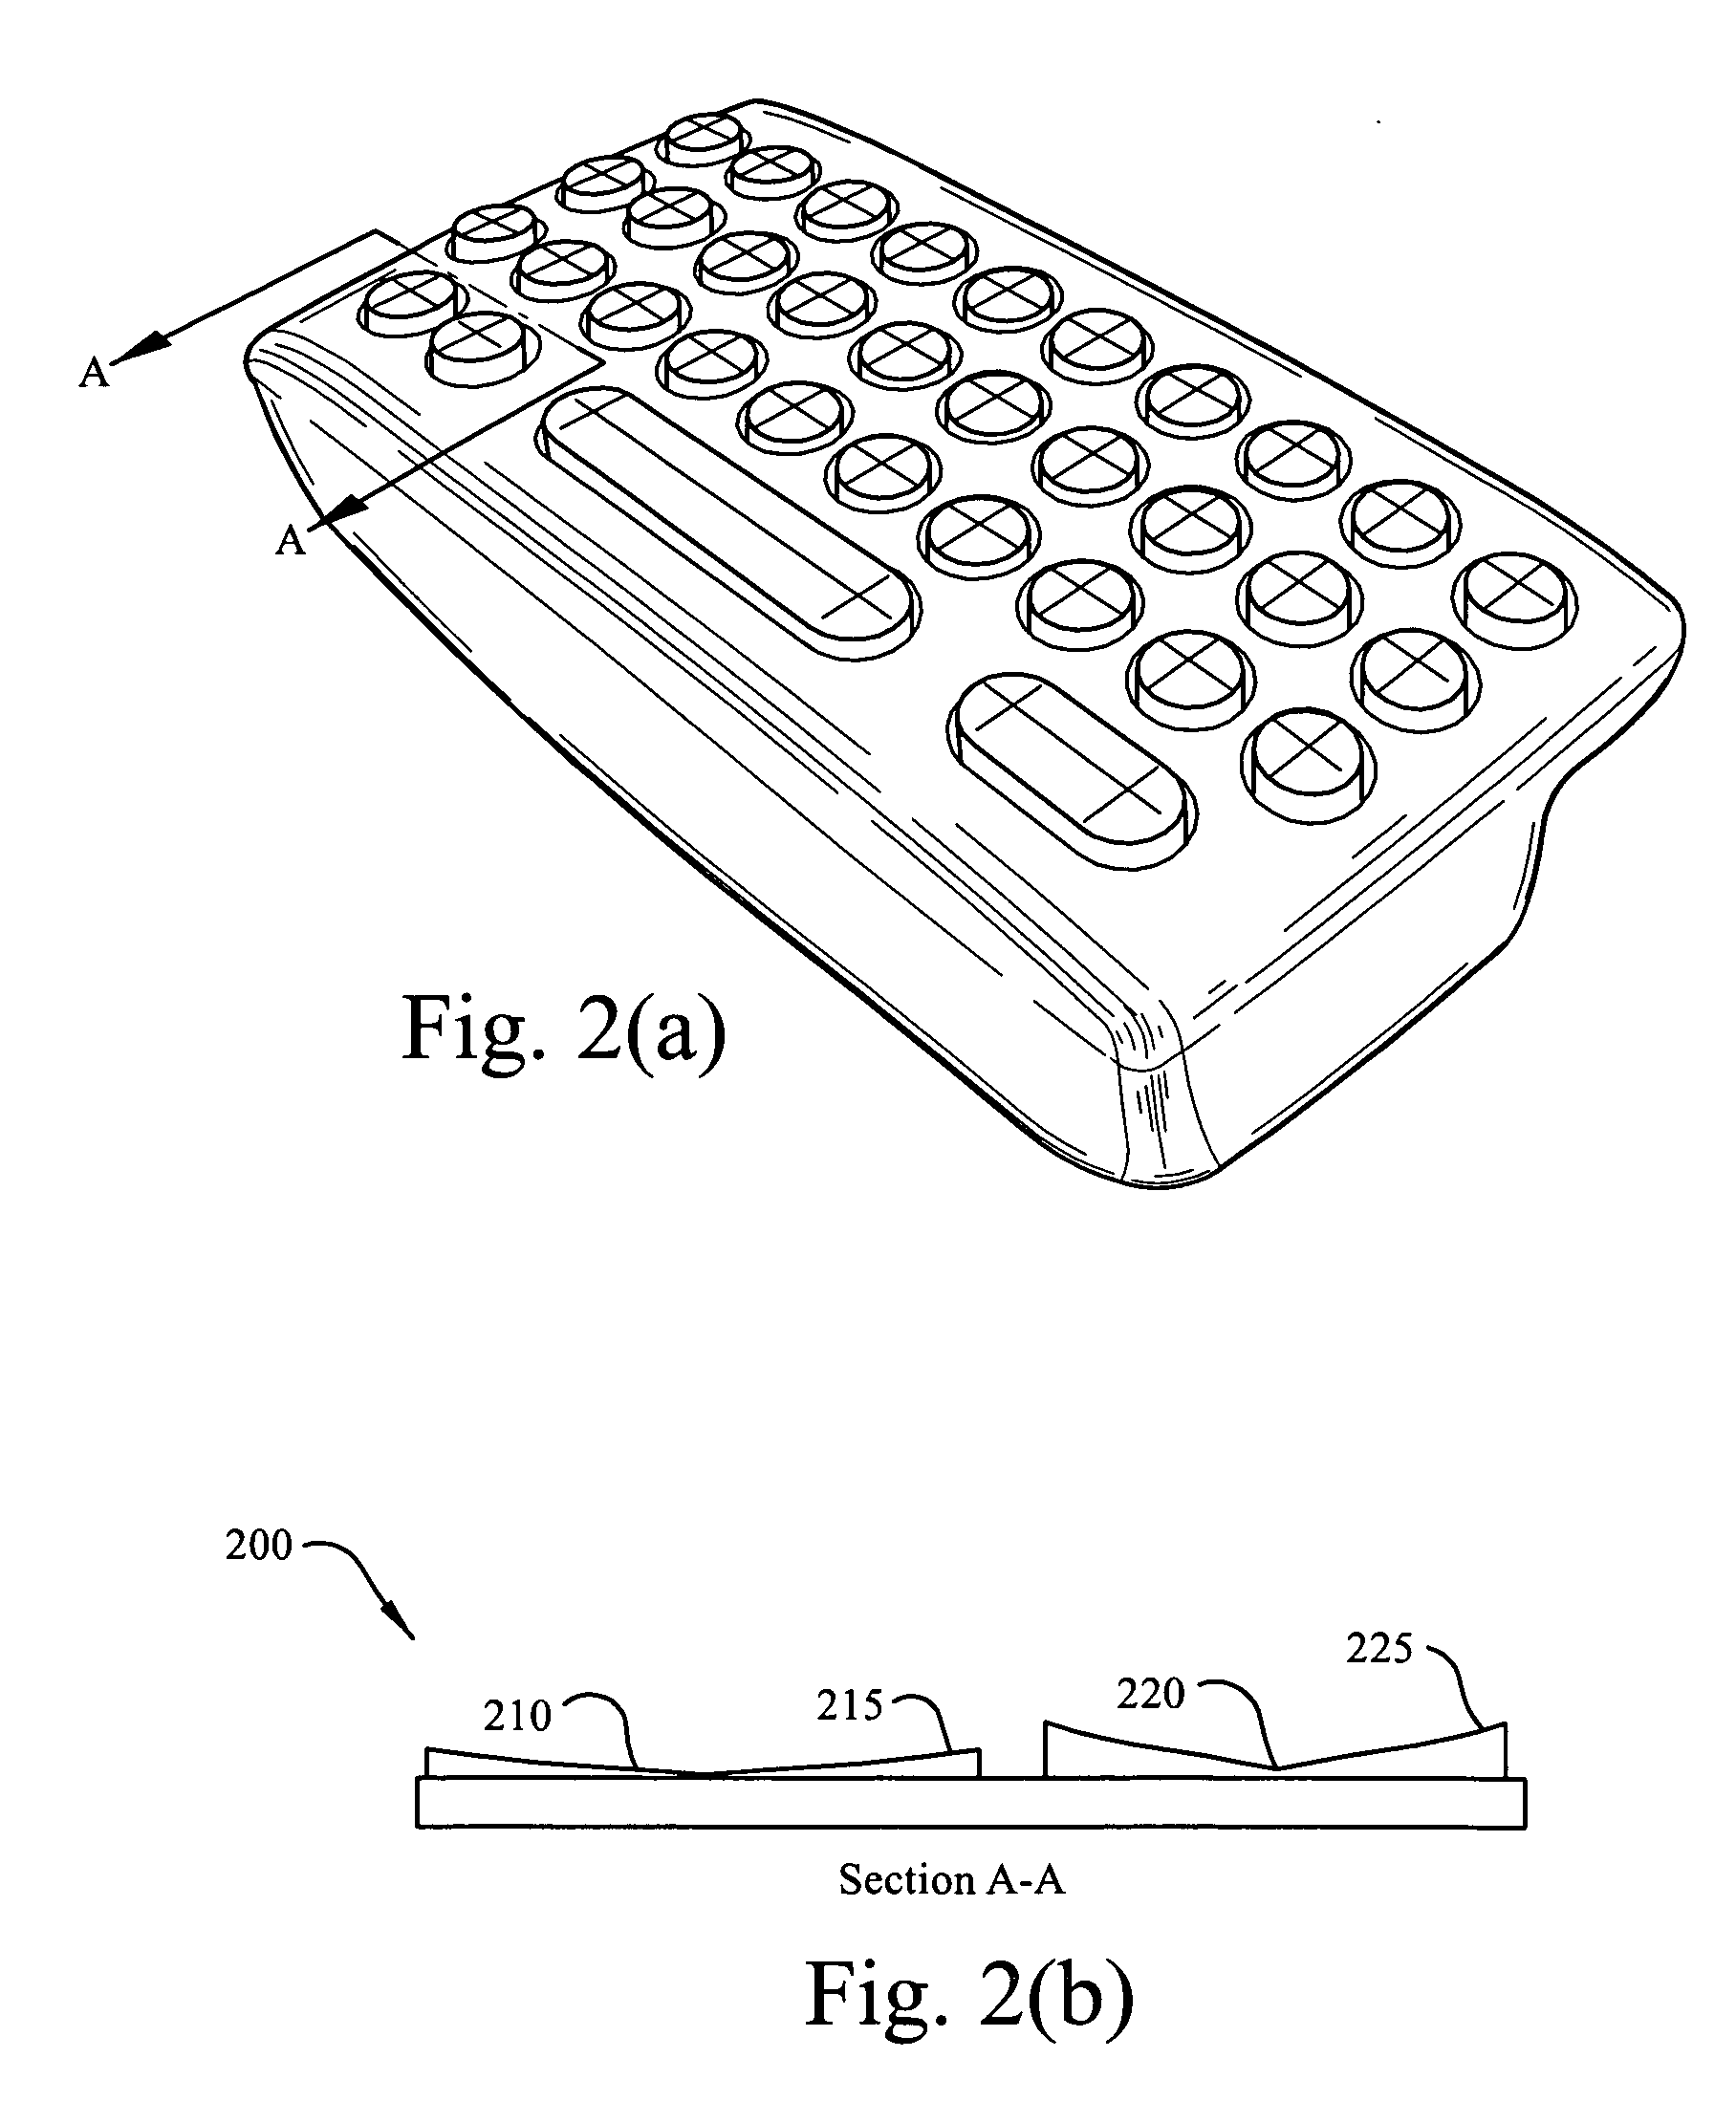 Keypad ergonomics